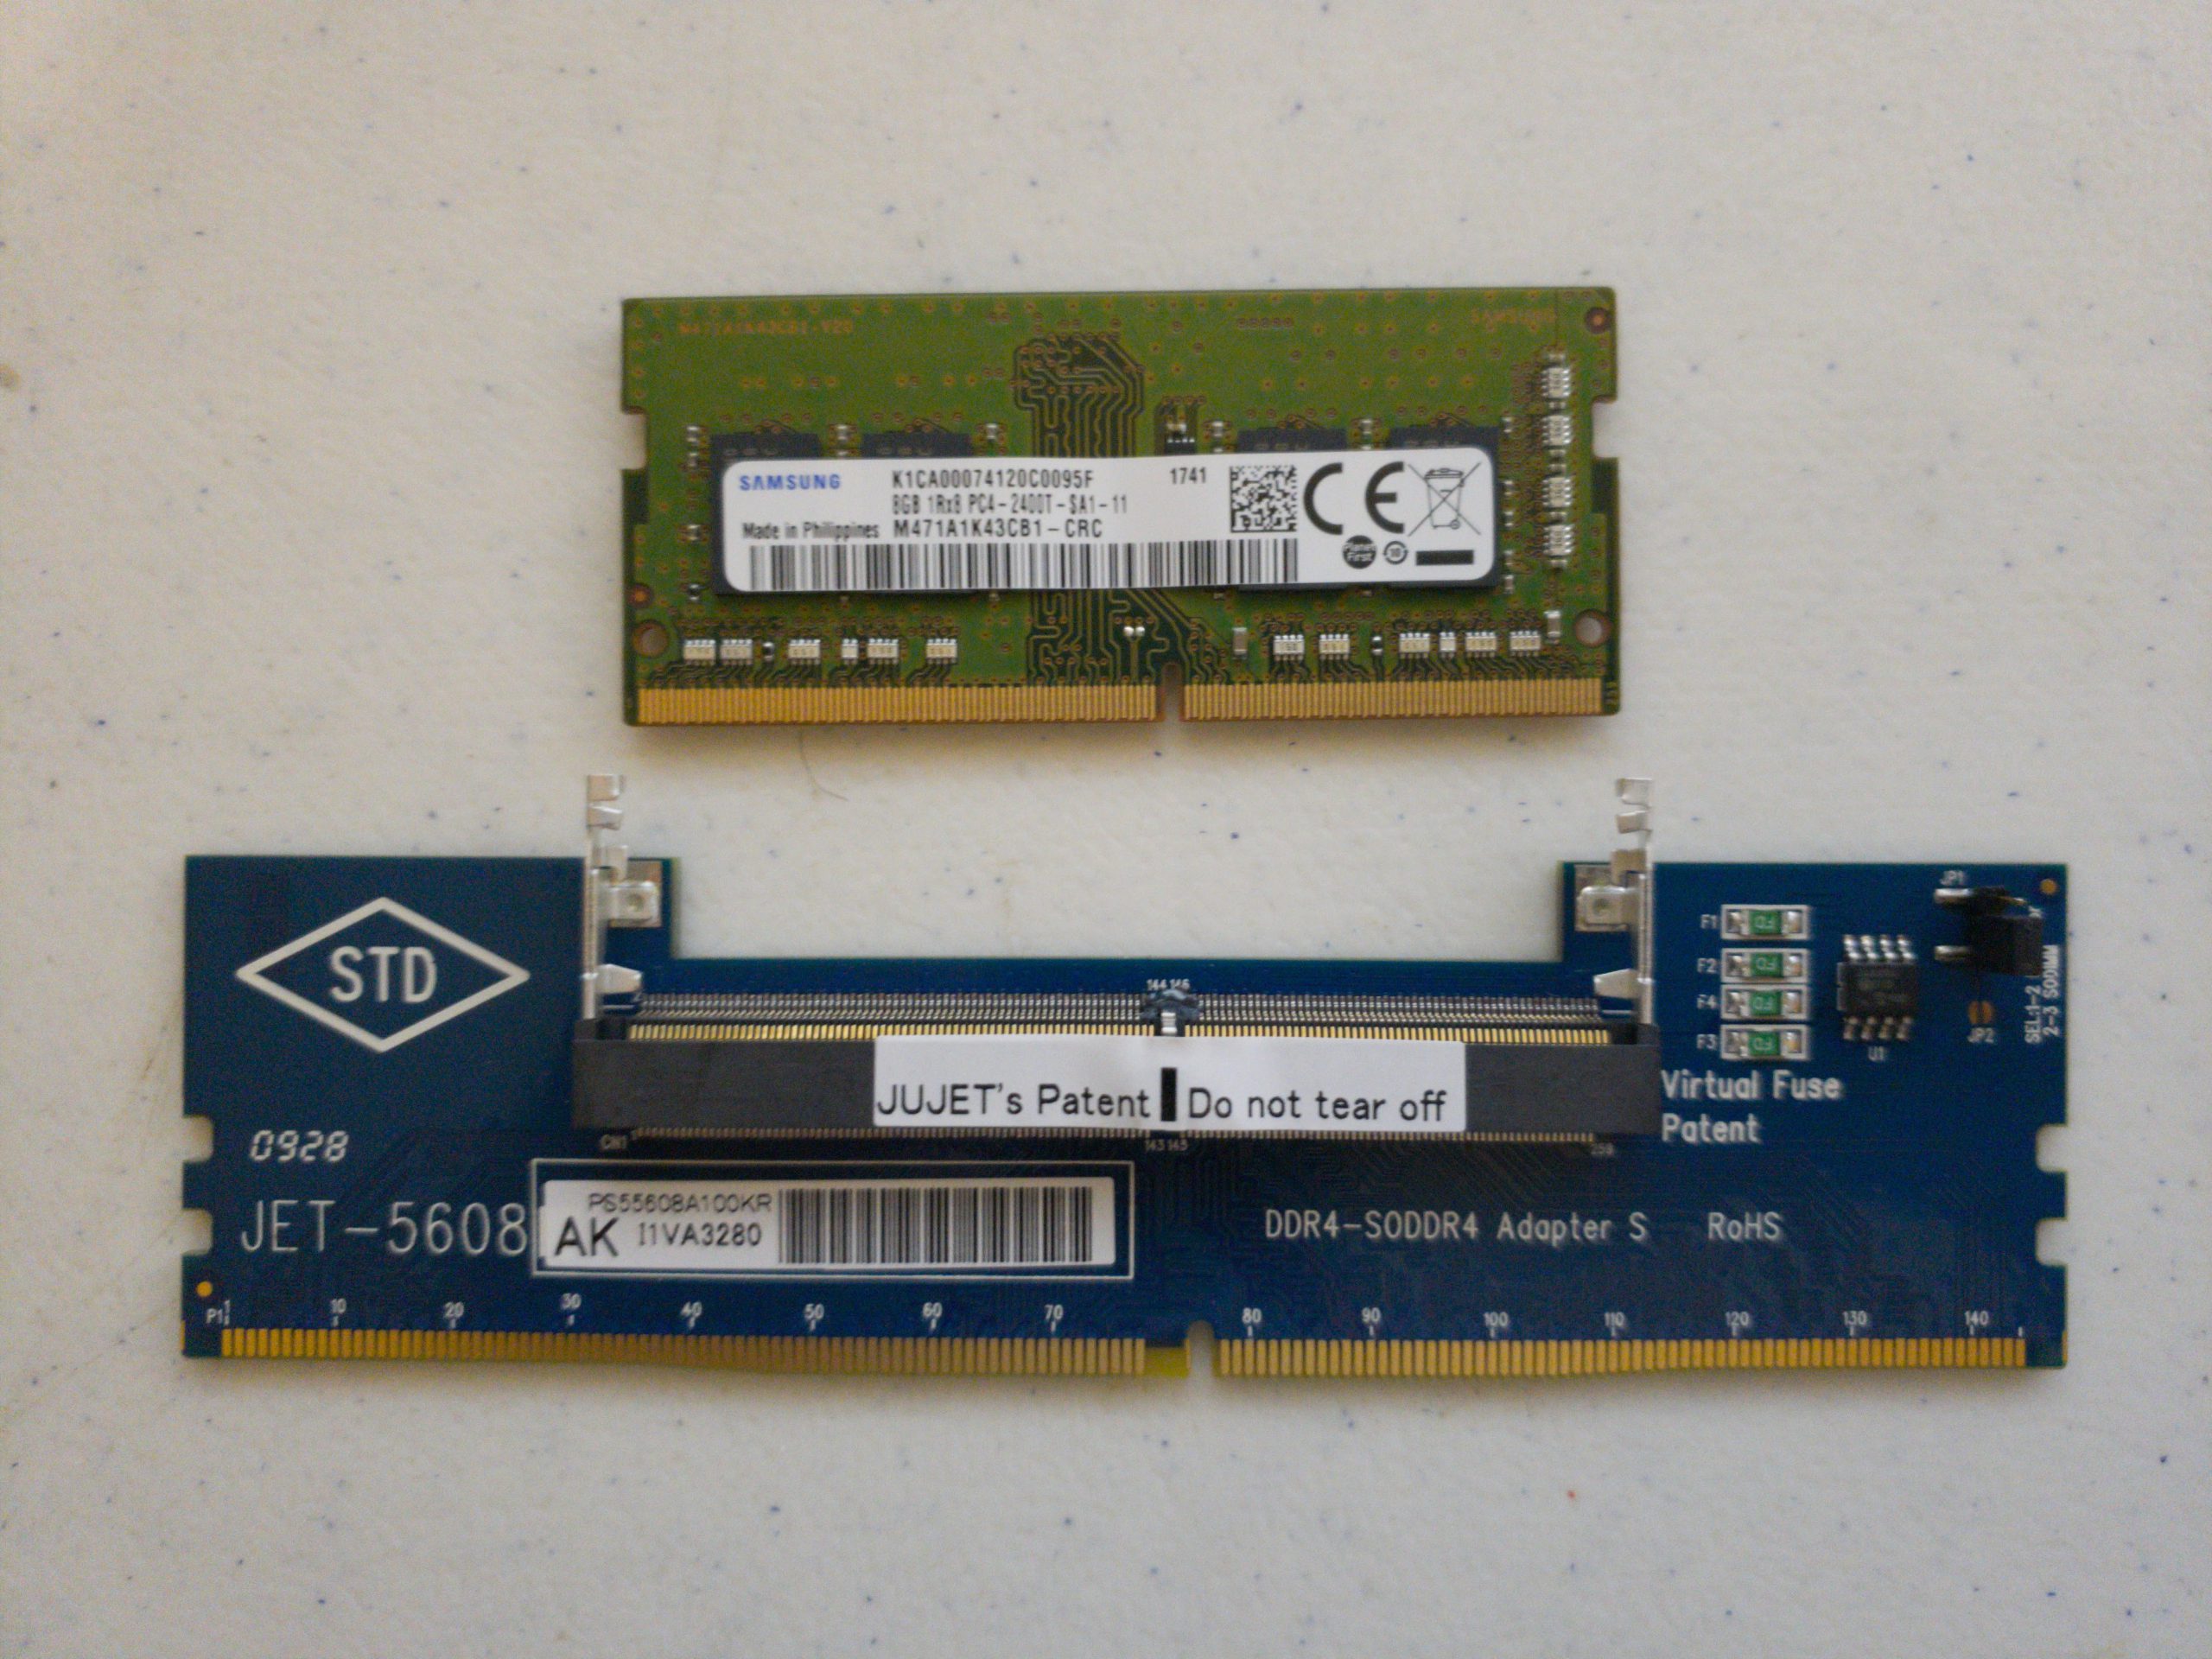 JET-5608AK DDR4 SODIMM to DIMM Adapter – 5 – Moisés Cardona